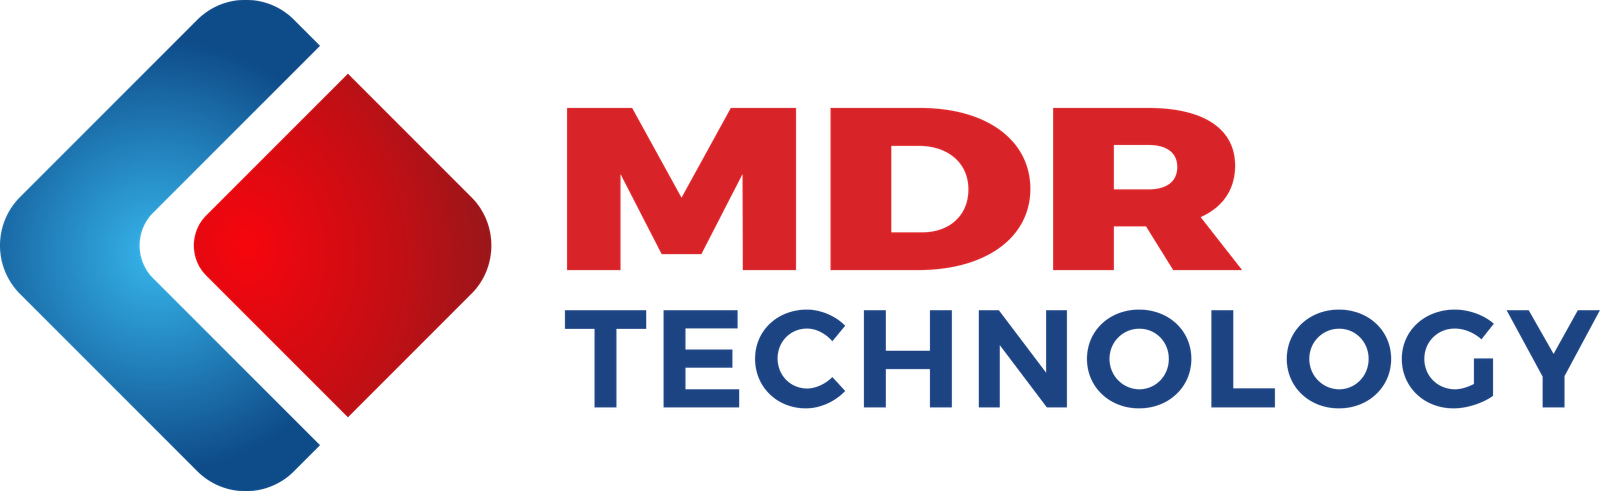 mdr technology logo tr